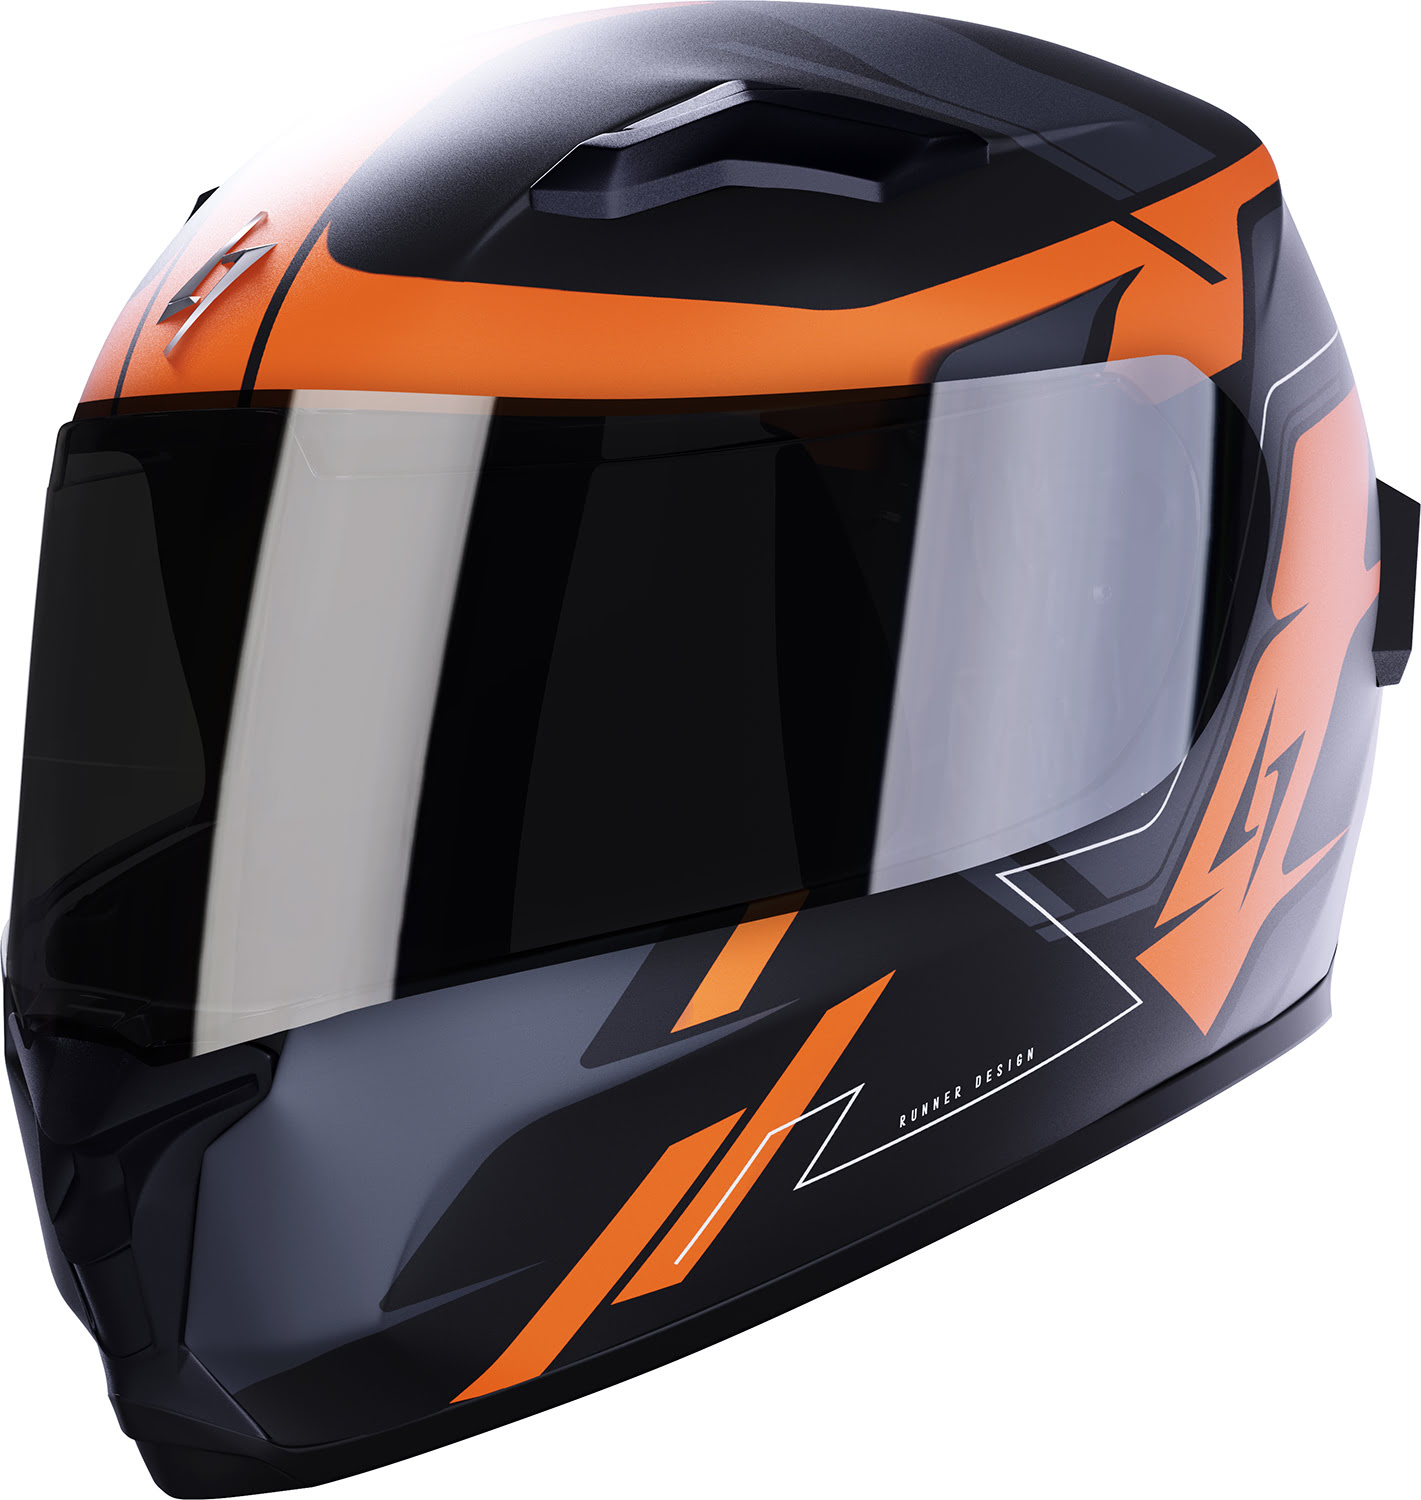 Helmet WISE RUNNER Orange Metal Matt STORMER 